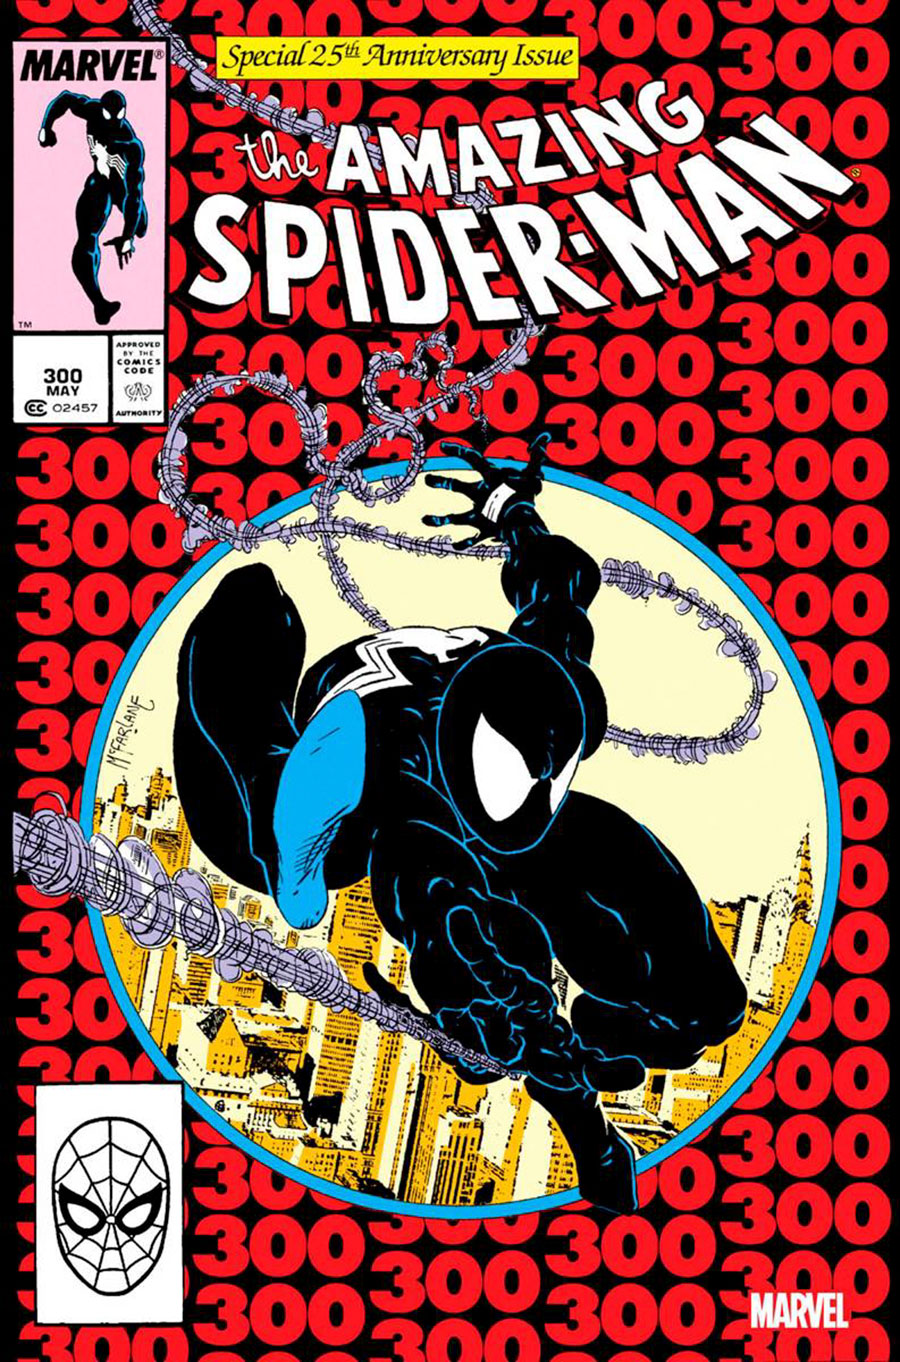 Amazing Spider-Man #300 Cover F Facsimile Edition